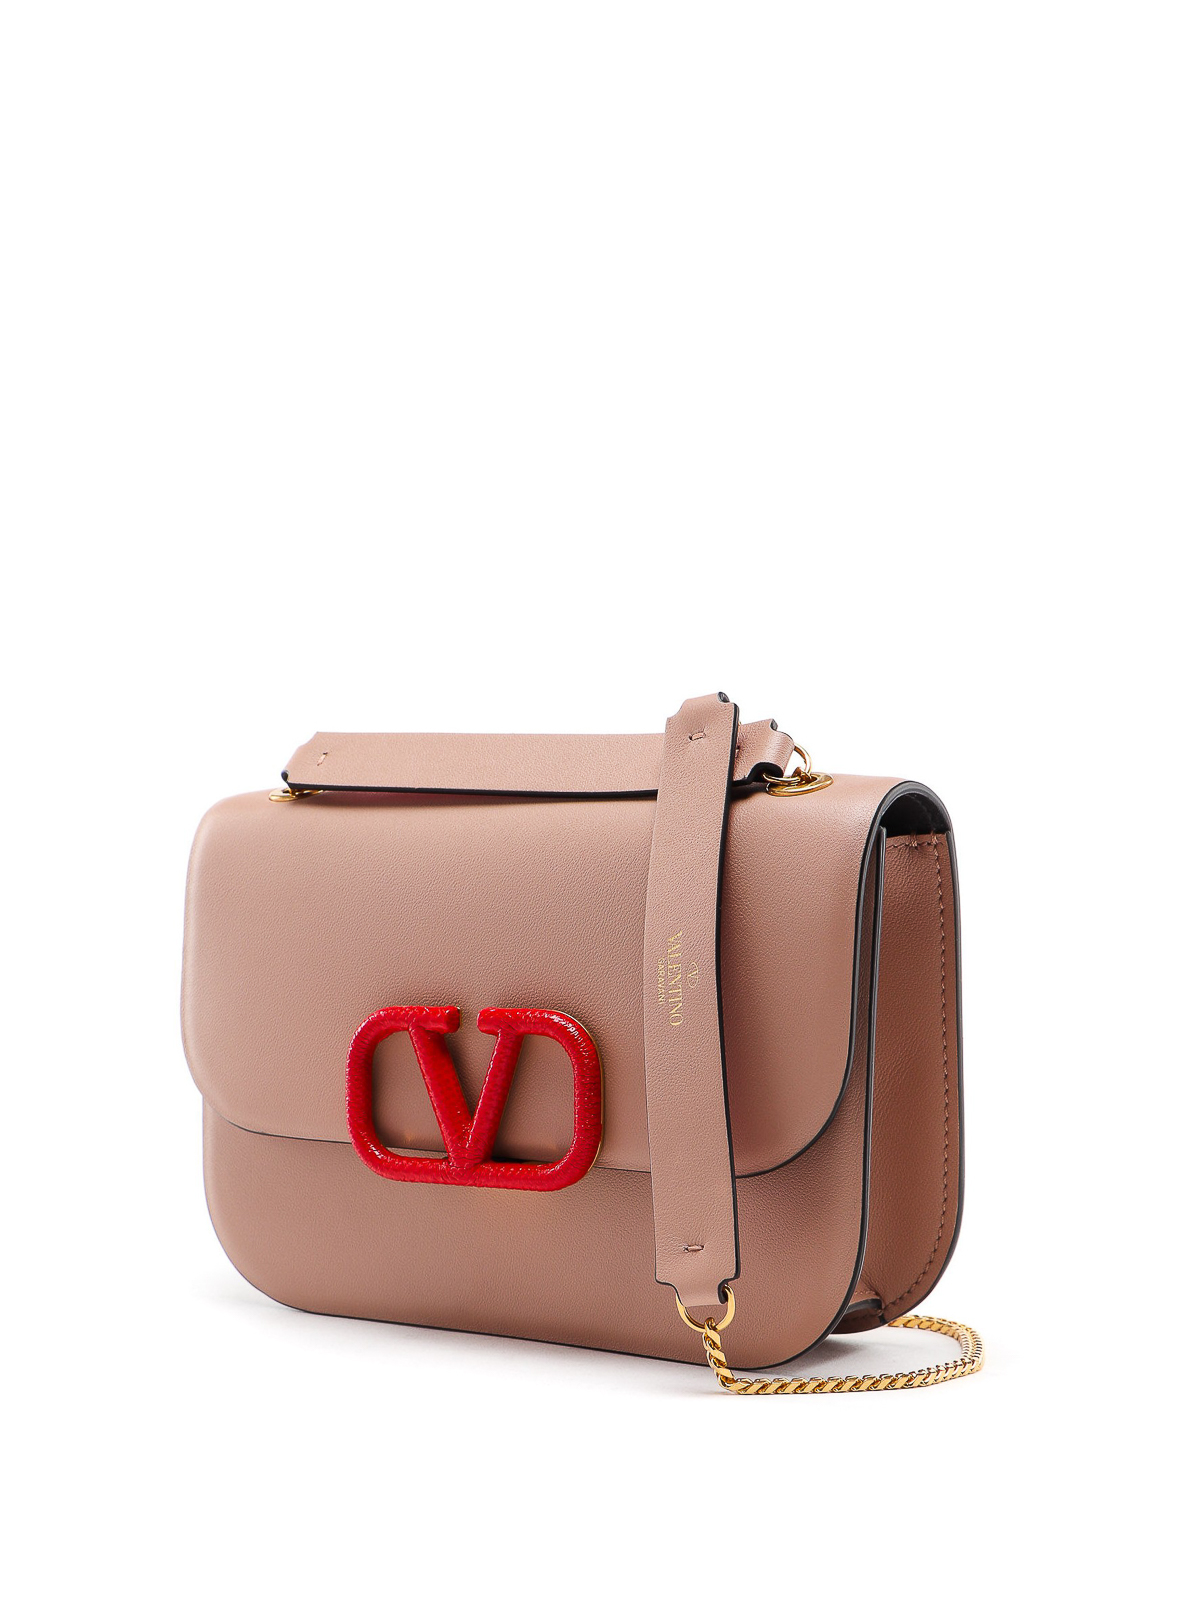 Loco Vitello Hobo Bag - Valentino Garavani - Brown - Leather